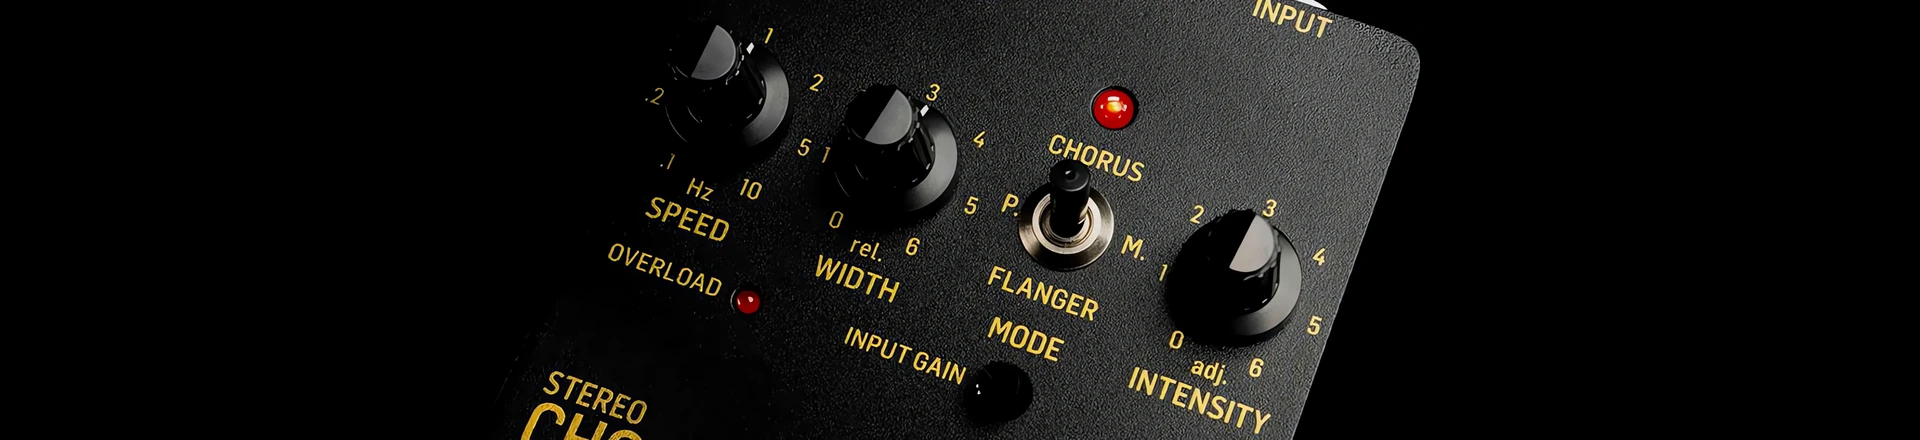 Stereo Chorus Flanger Gold - TC Electronic wskrzesza kultowy chorus/flanger SCF